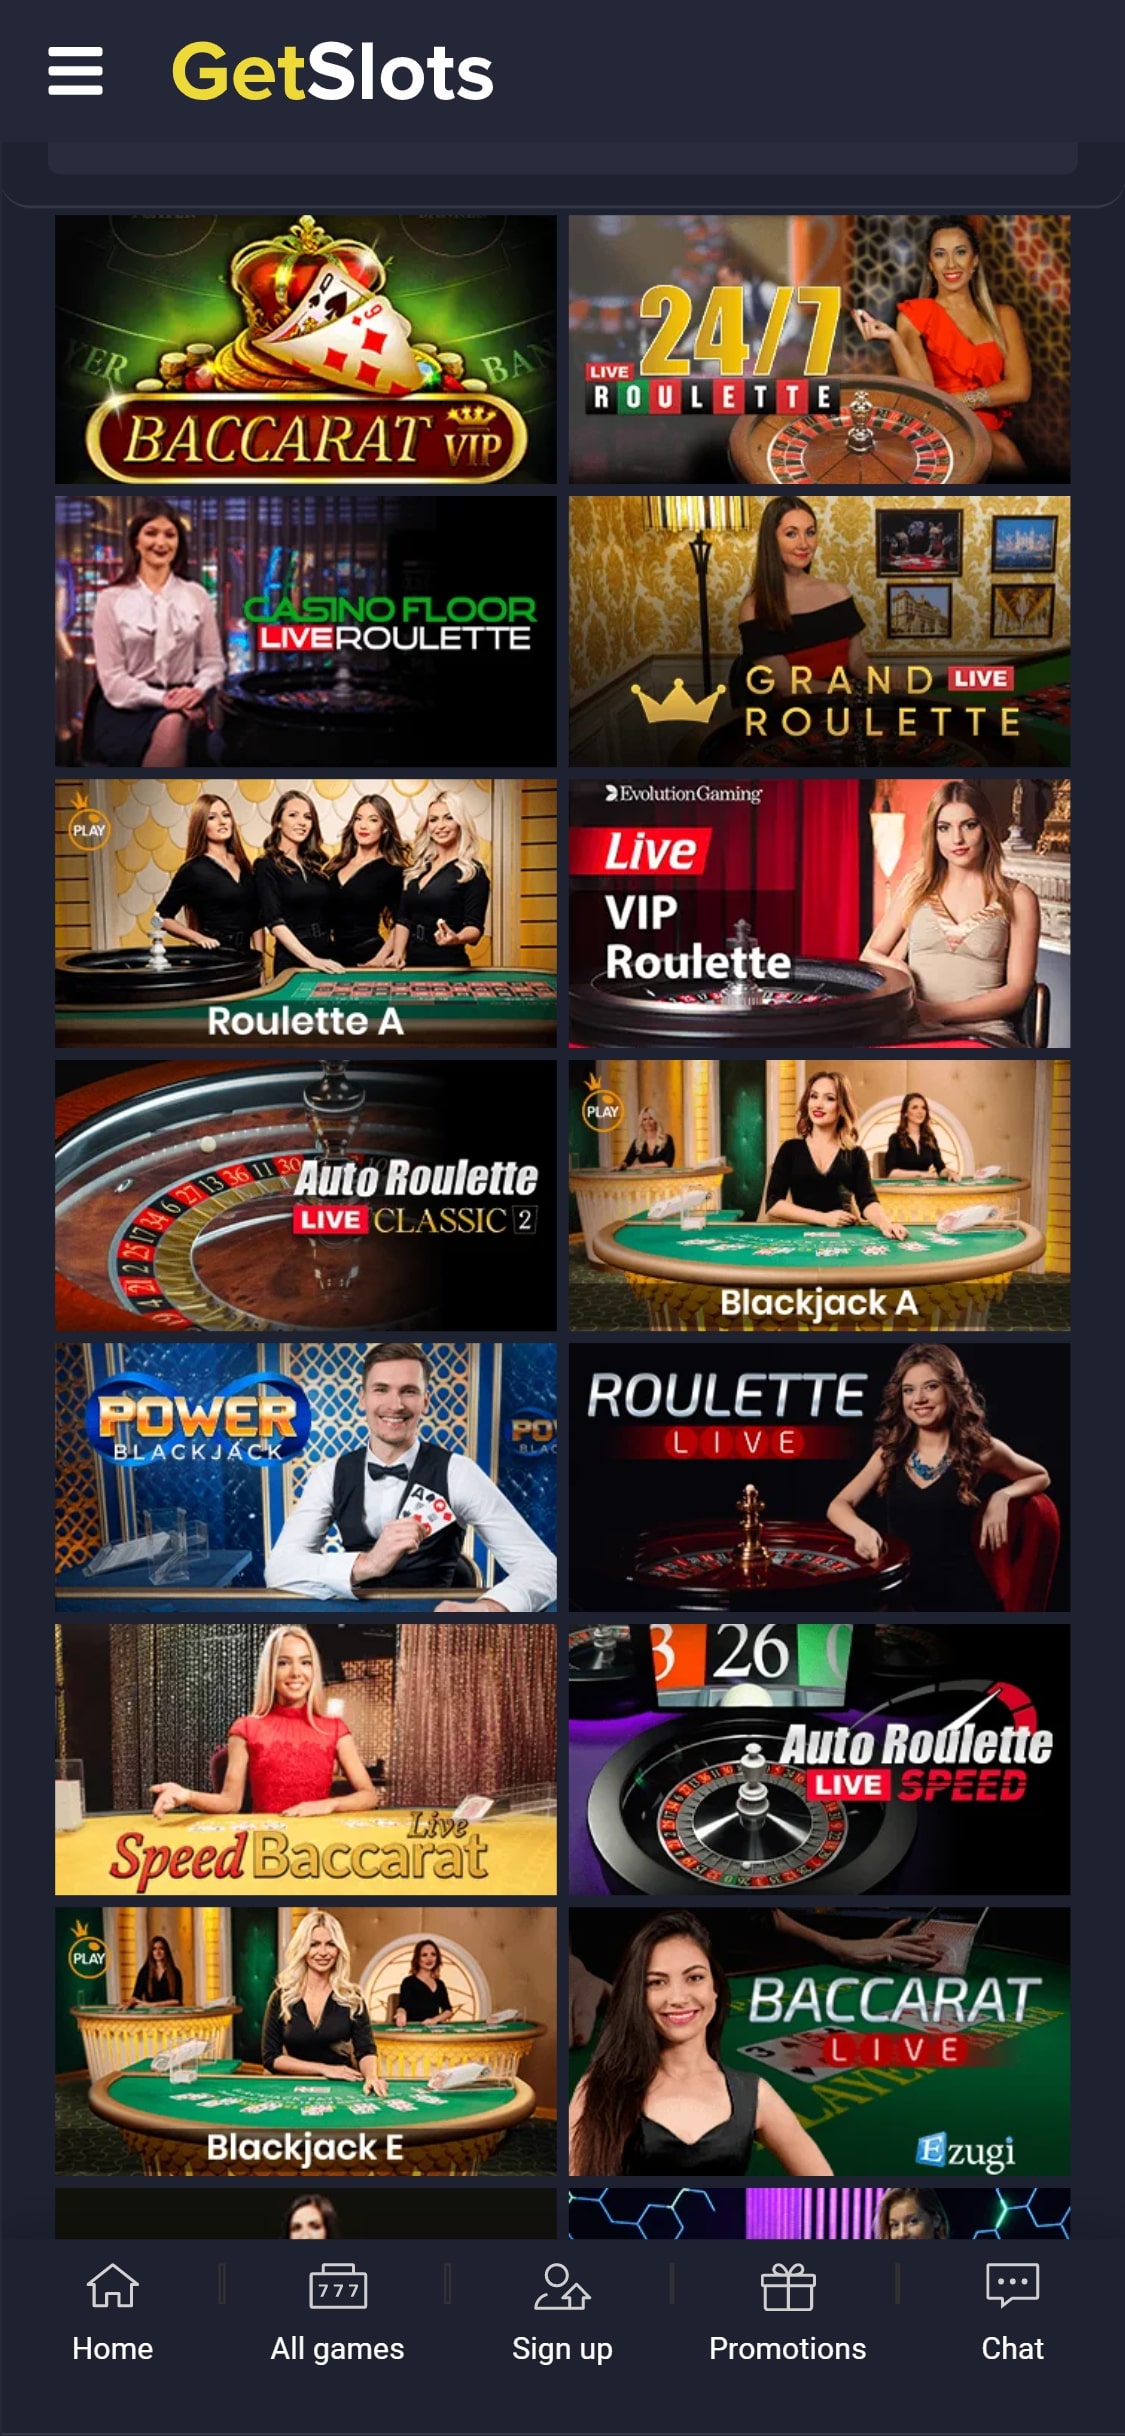 GetSlots Casino Mobile Live Dealer Games Review